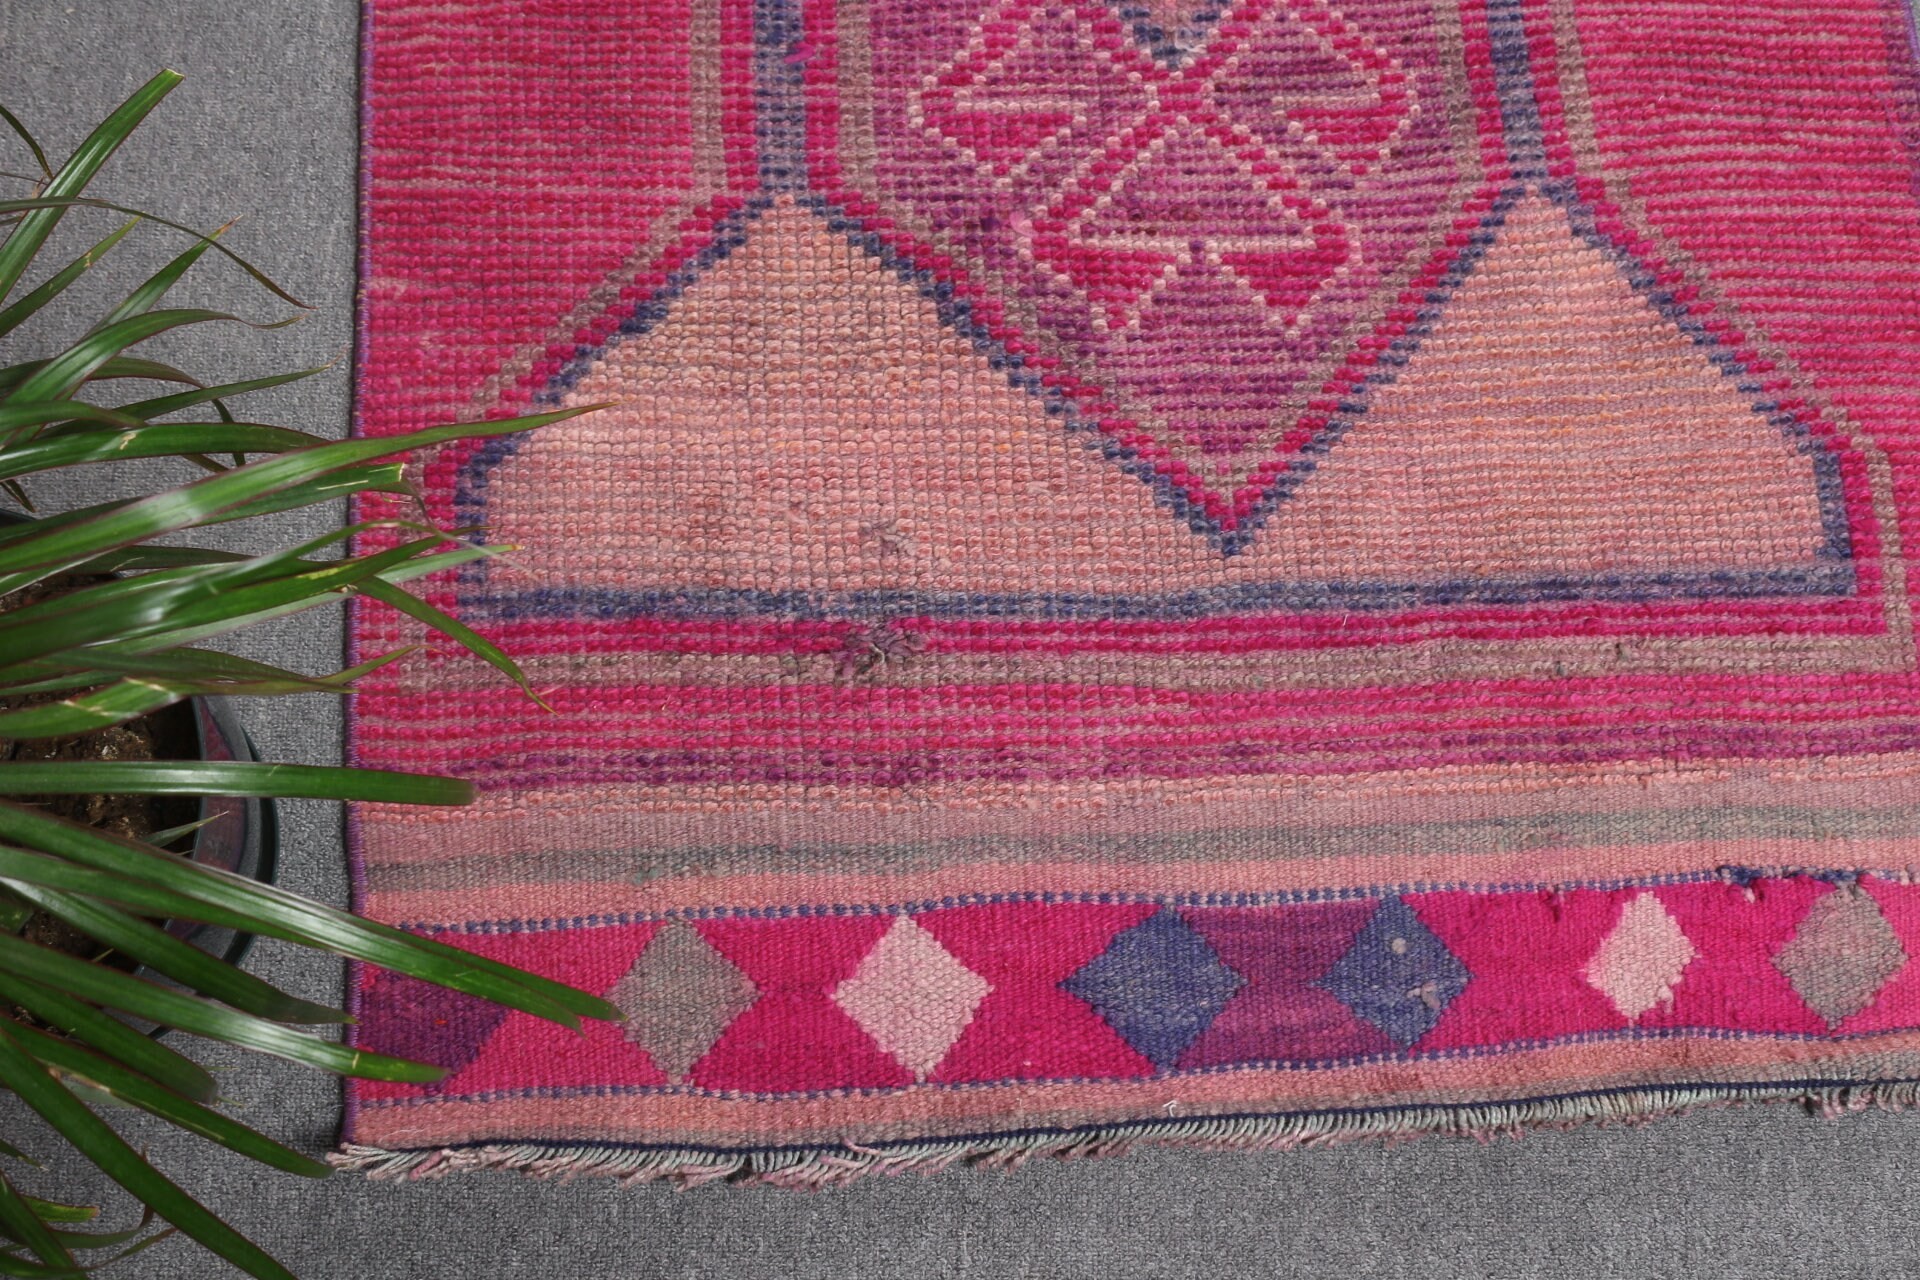 Moroccan Rug, Rugs for Stair, Hallway Rug, Turkish Rugs, Pink Kitchen Rugs, Stair Rug, Home Decor Rug, Vintage Rug, 2.9x11.3 ft Runner Rug